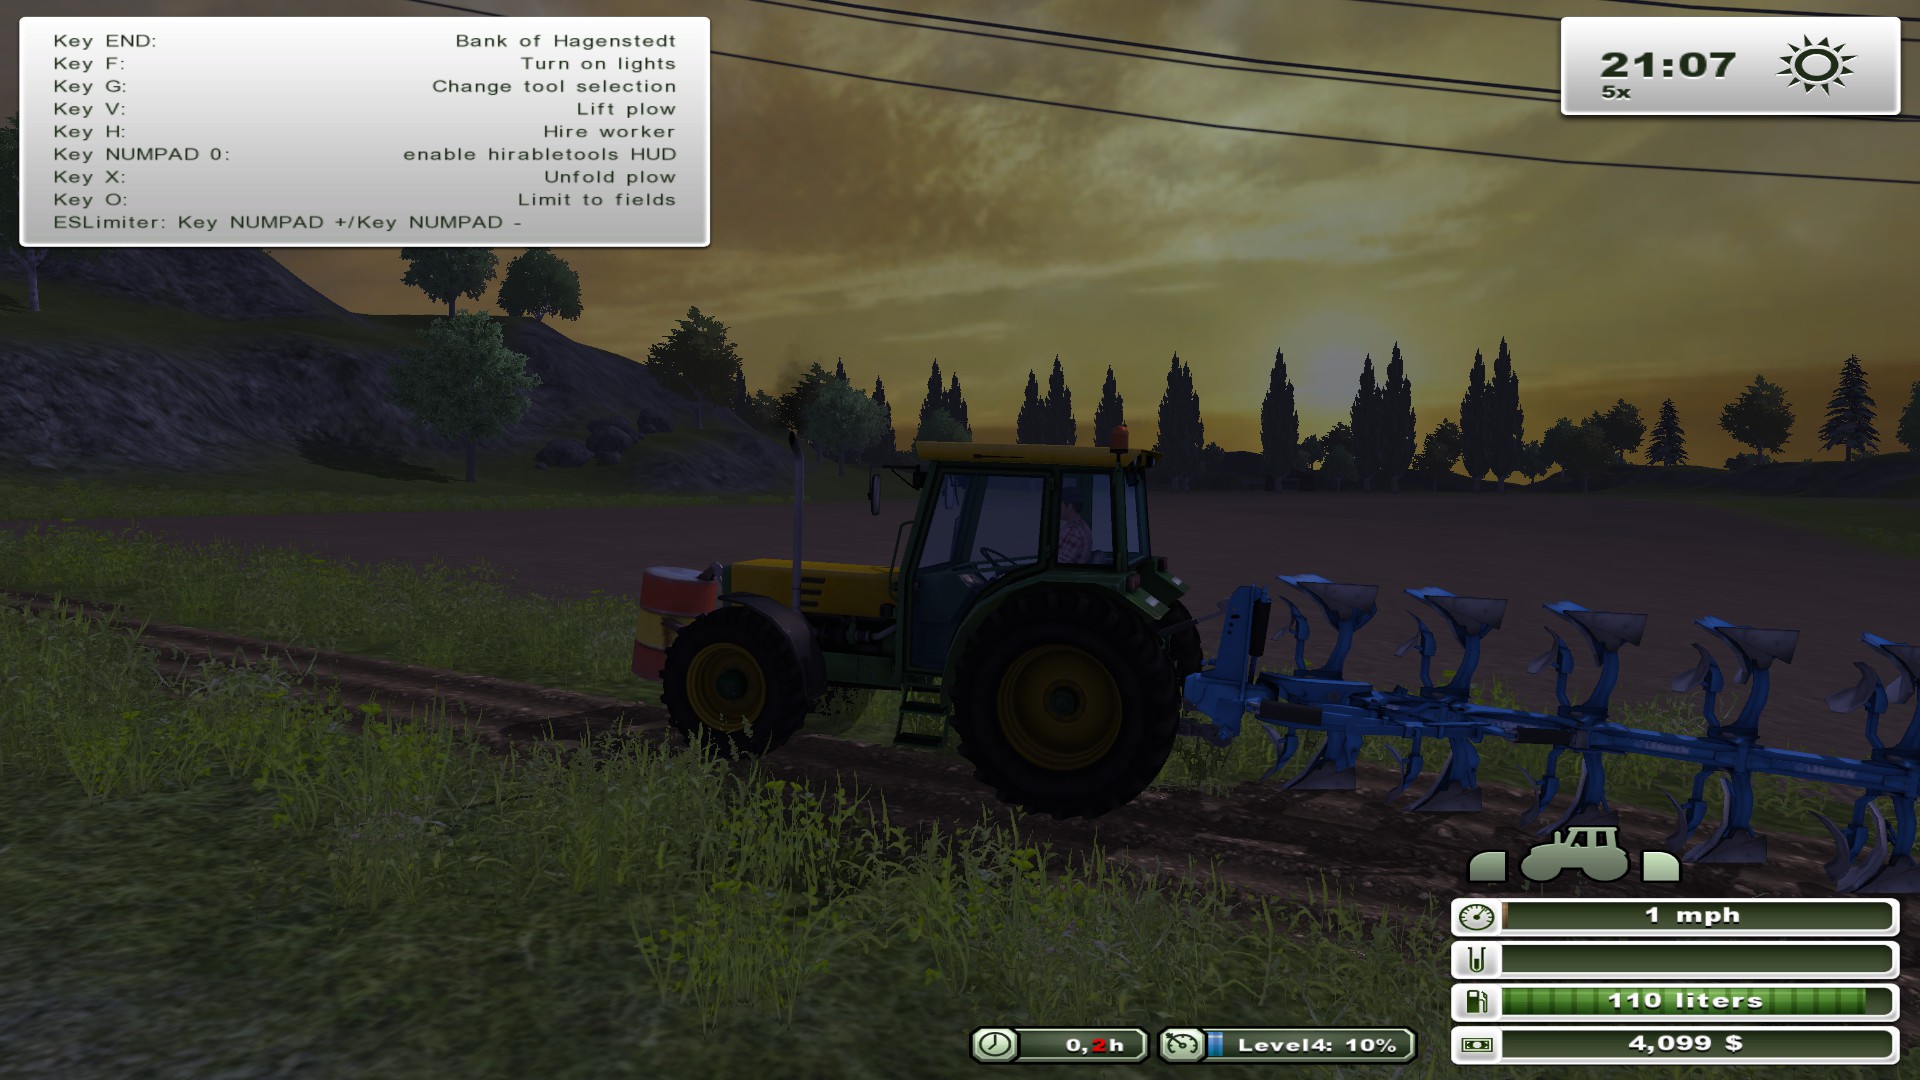 farming simulator 2013 steam download free